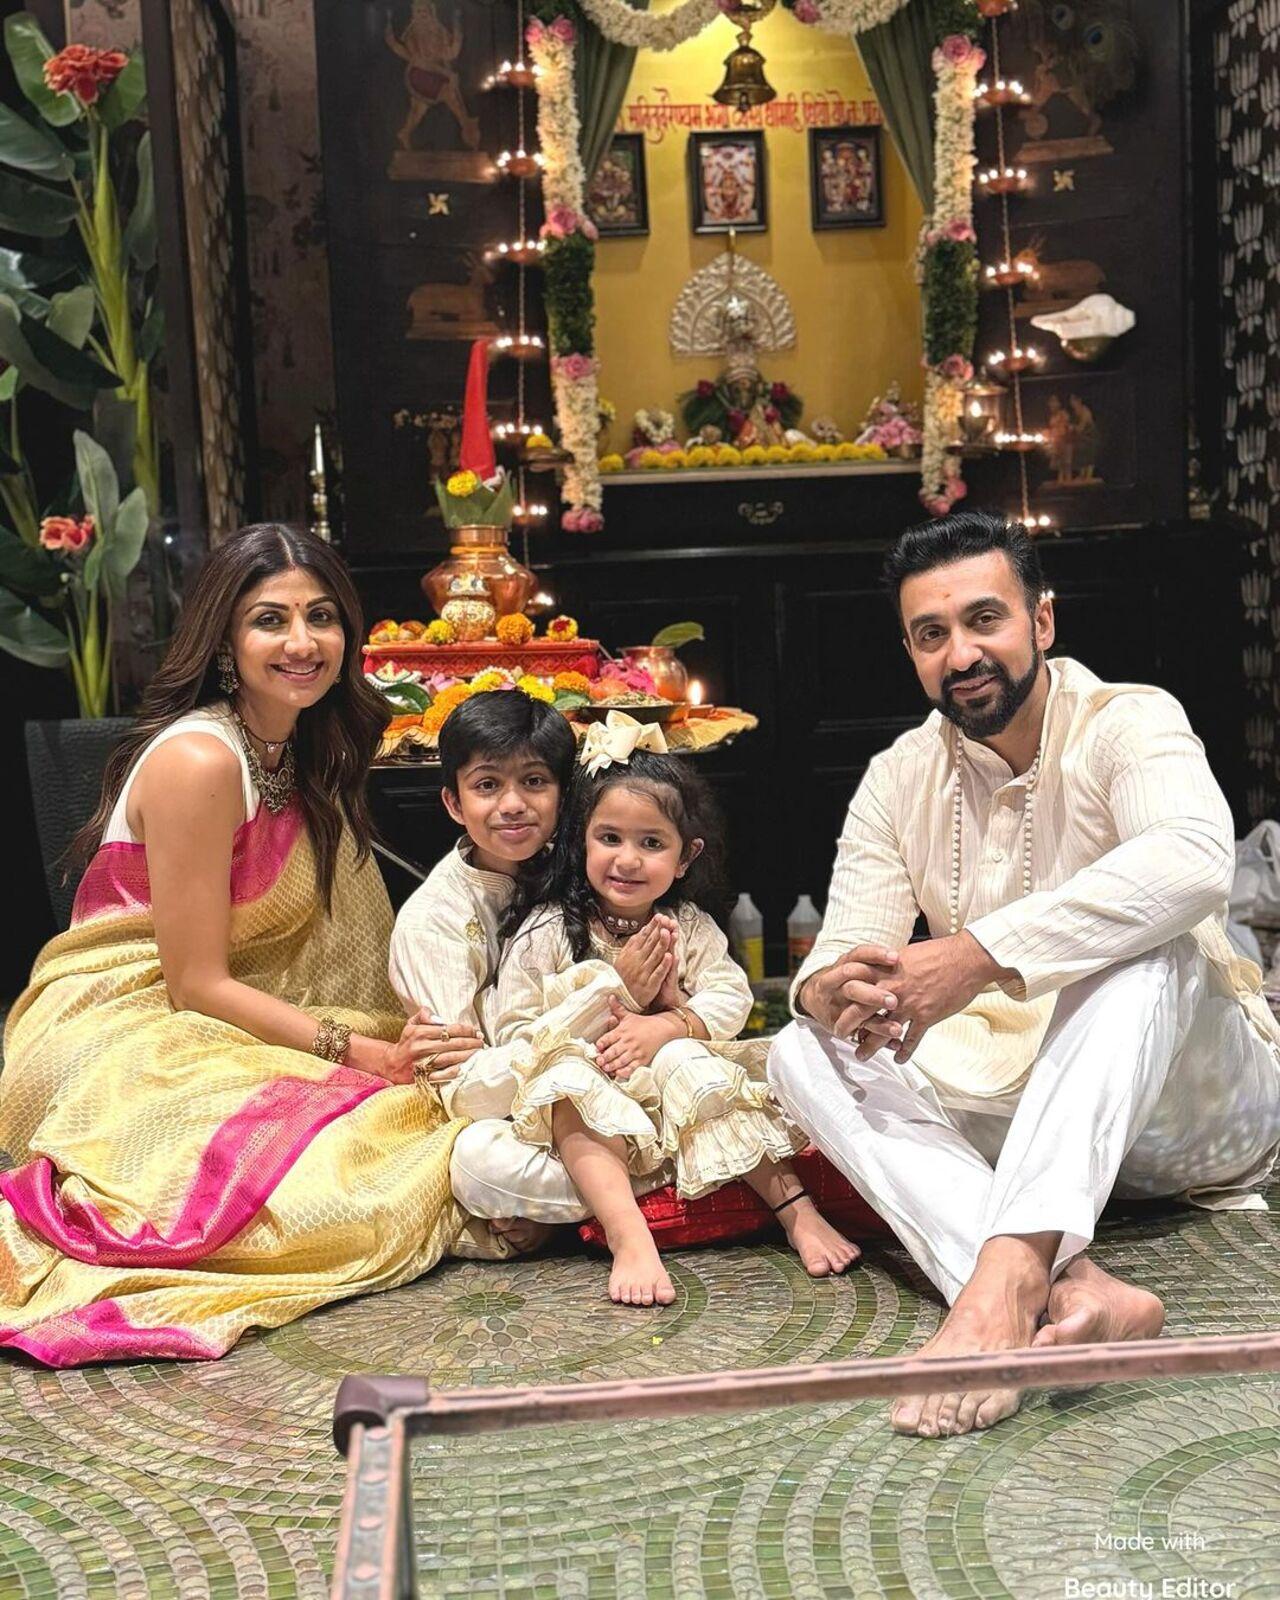 Shilpa Shetty gave a glimpse of her Diwali celebration at home with Raj Kundra, Viaan Raj Kundra and Samisha Shetty Kundra